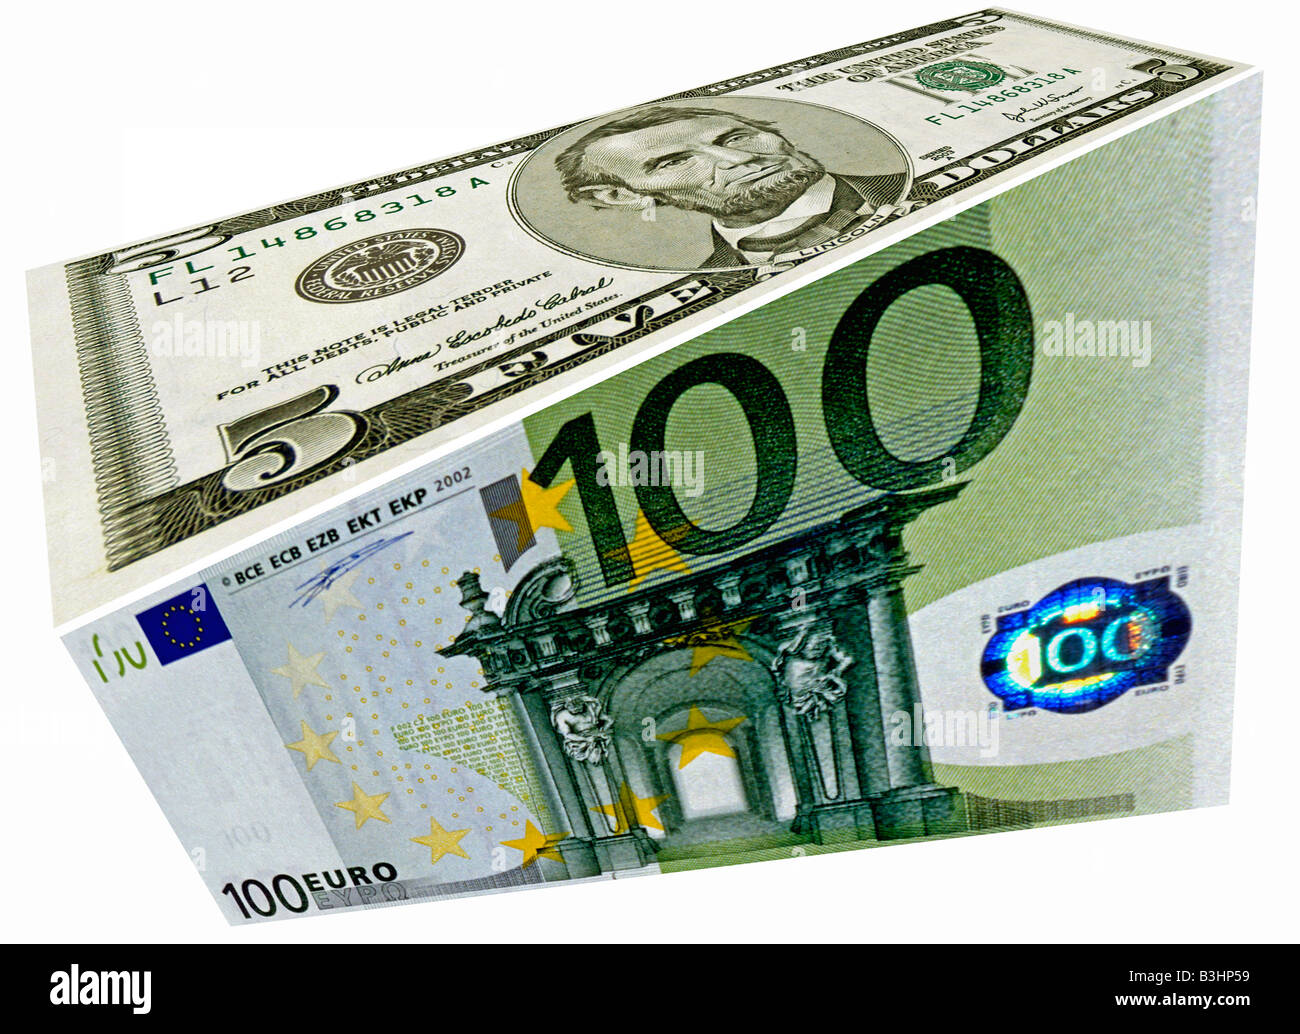 100 euros and 5 U.S. dollars banknote Stock Photo